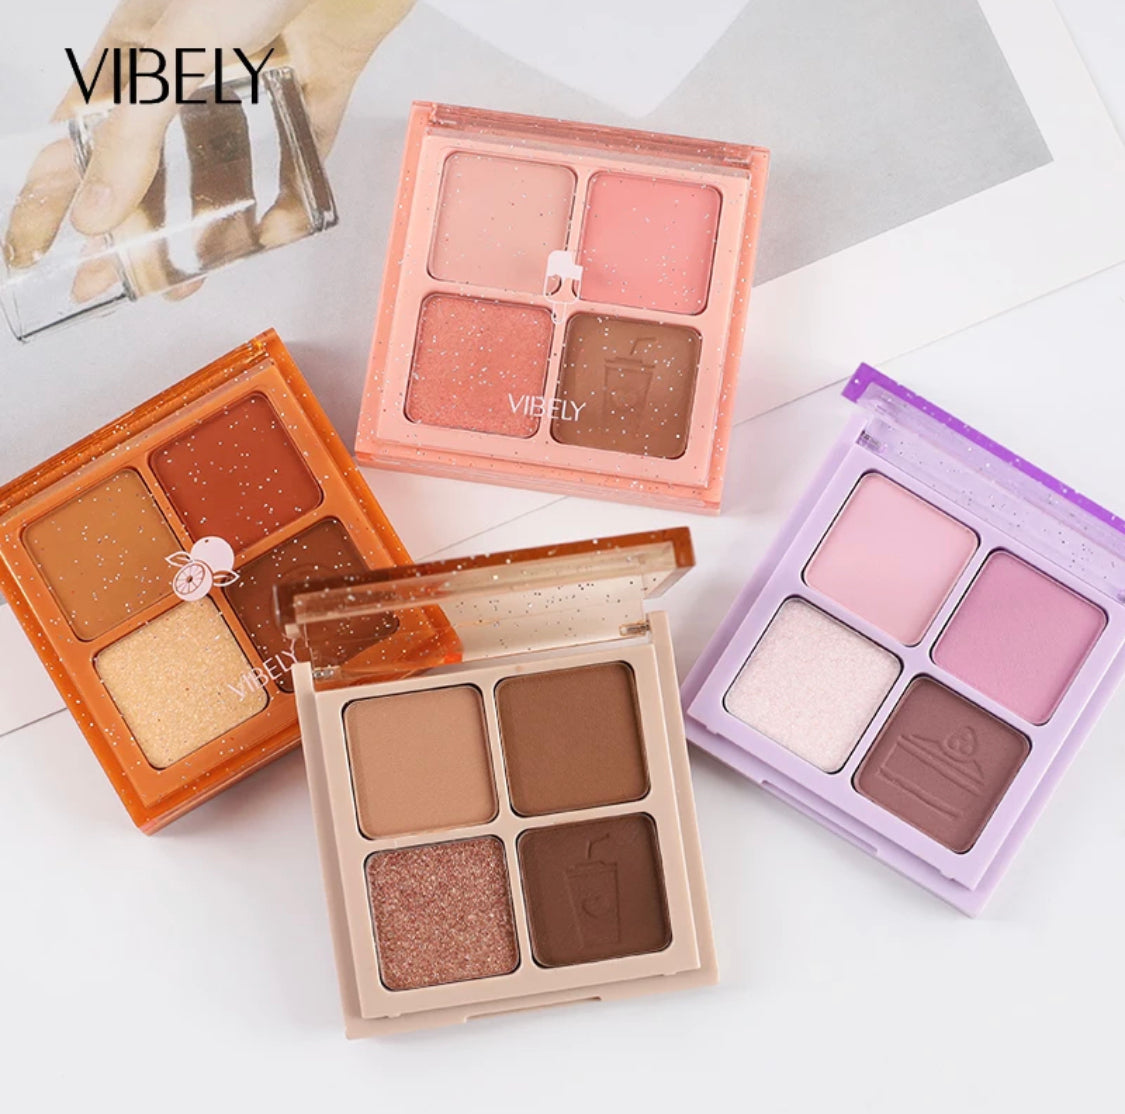 Vibely velvet honey eye shadow palettes-(various colors